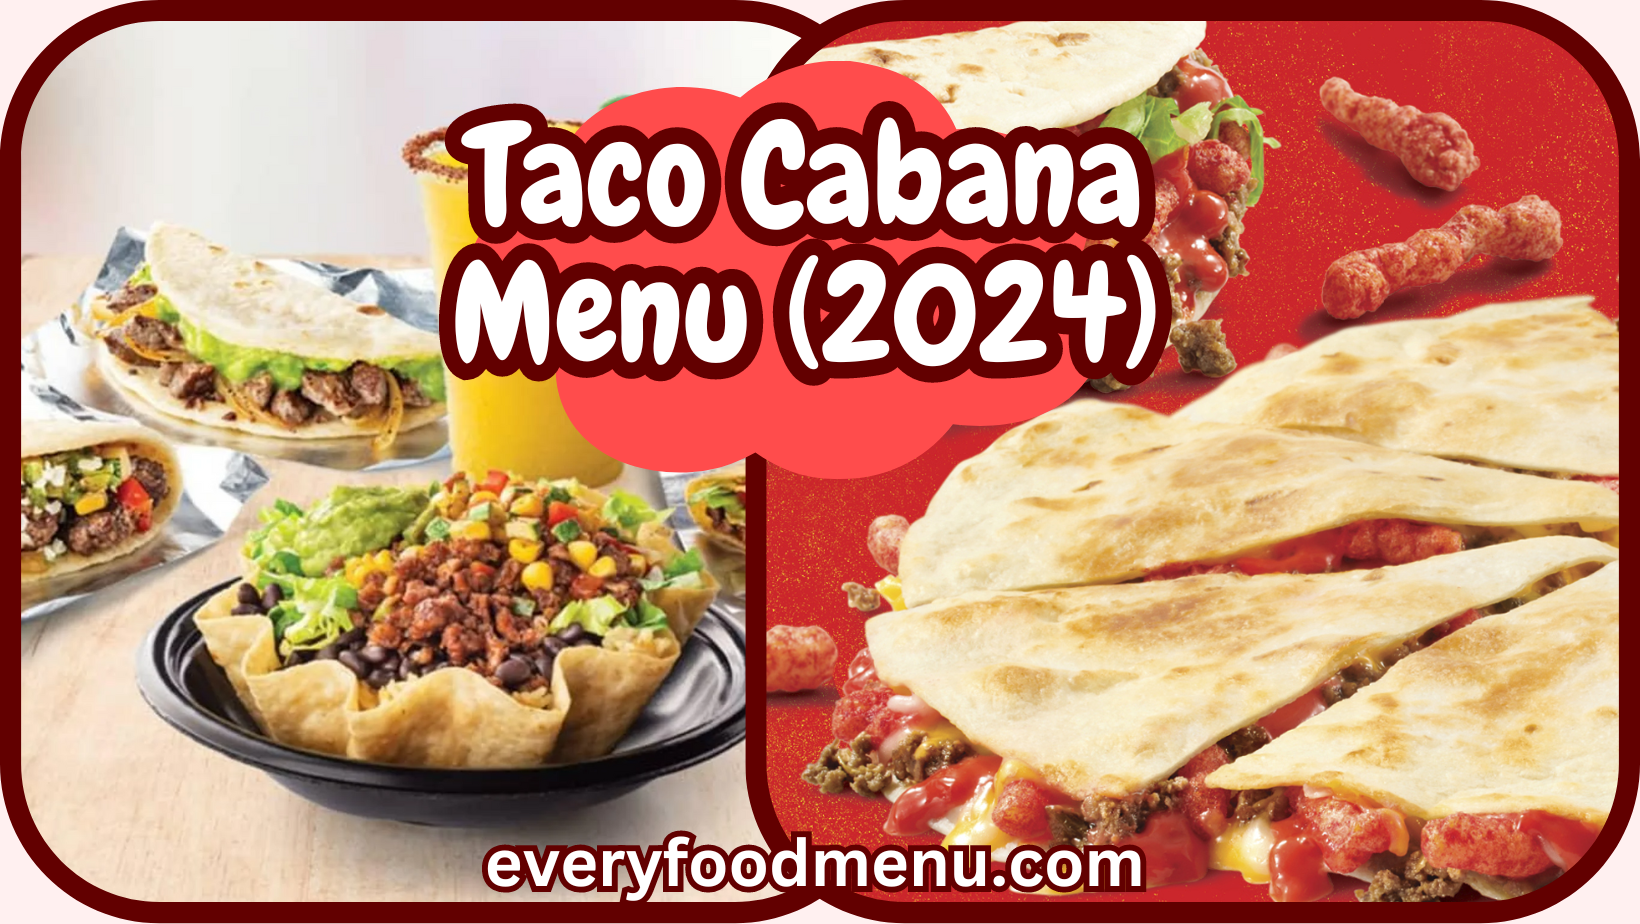 Taco Cabana Menu (2024)